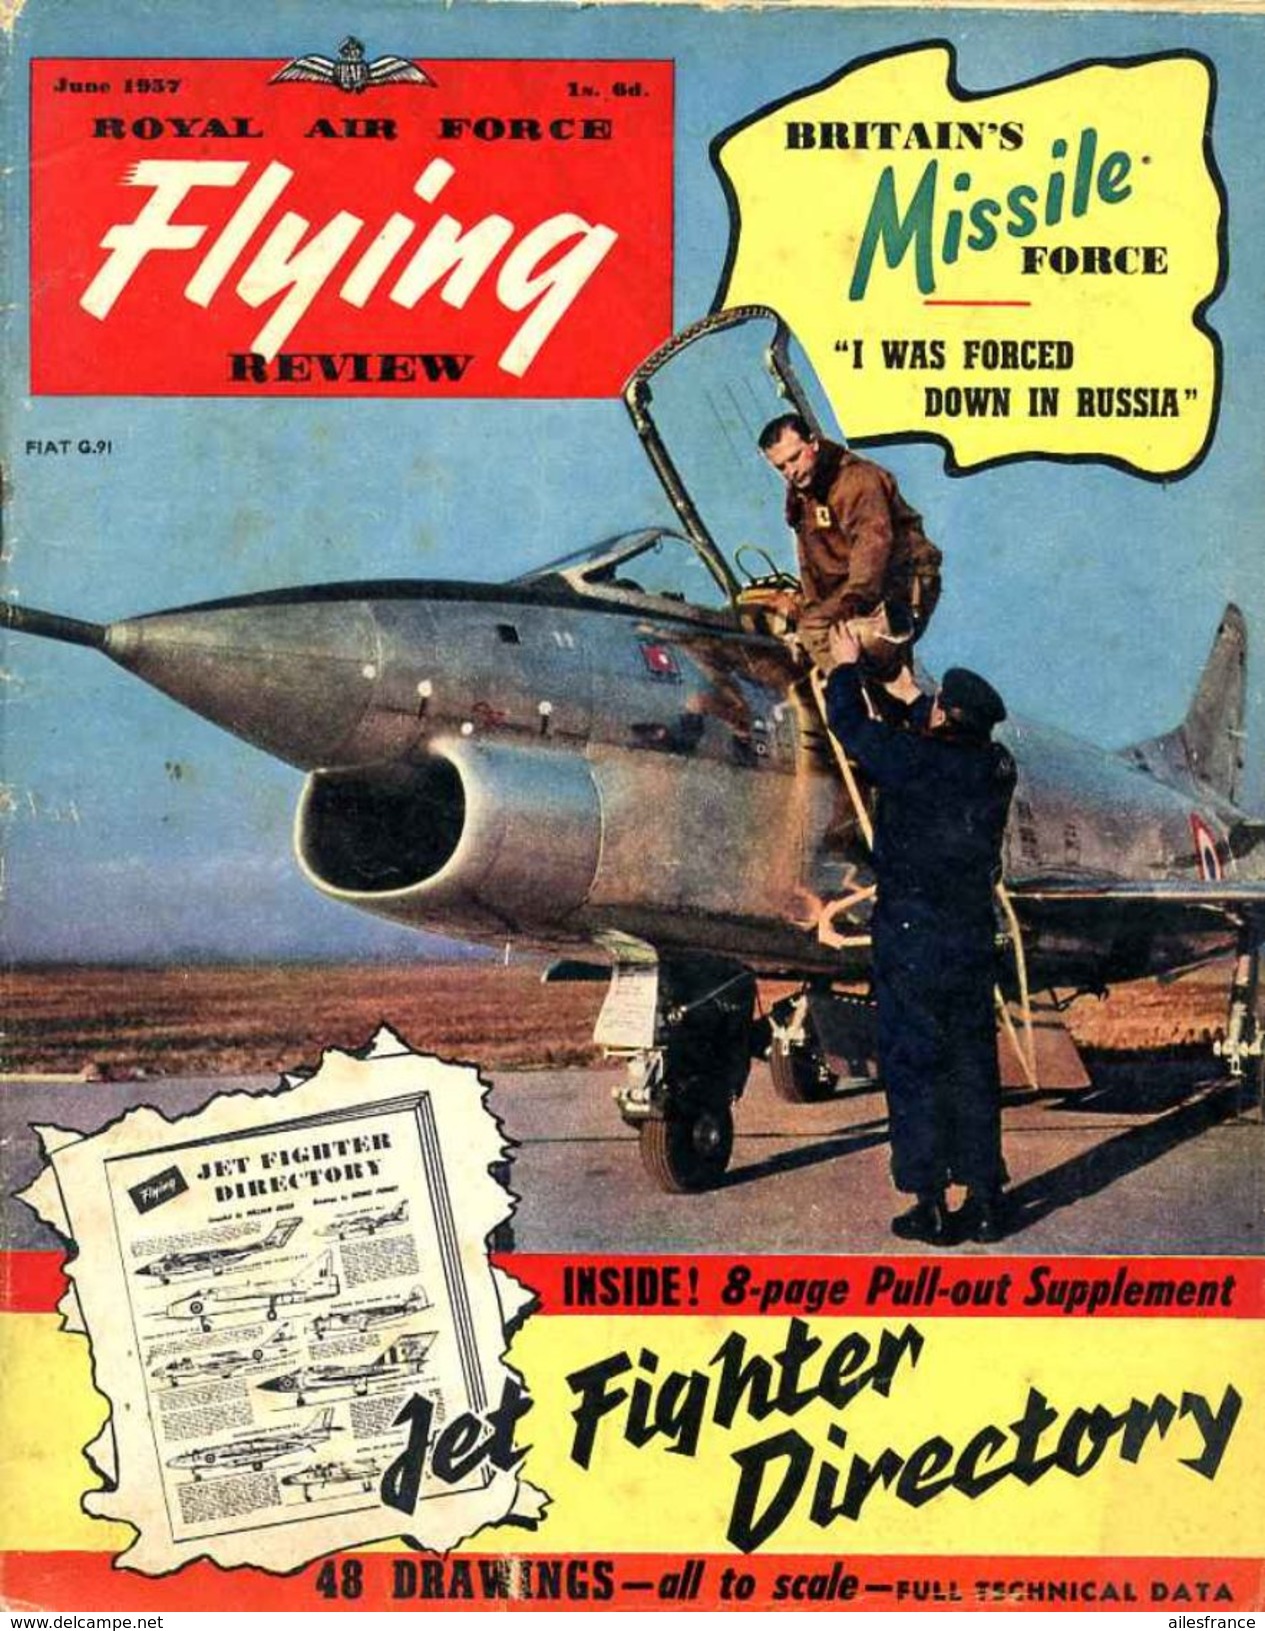 Royal Air Force Flying Revue Vol XII, N°10 June 1957 - Military/ War